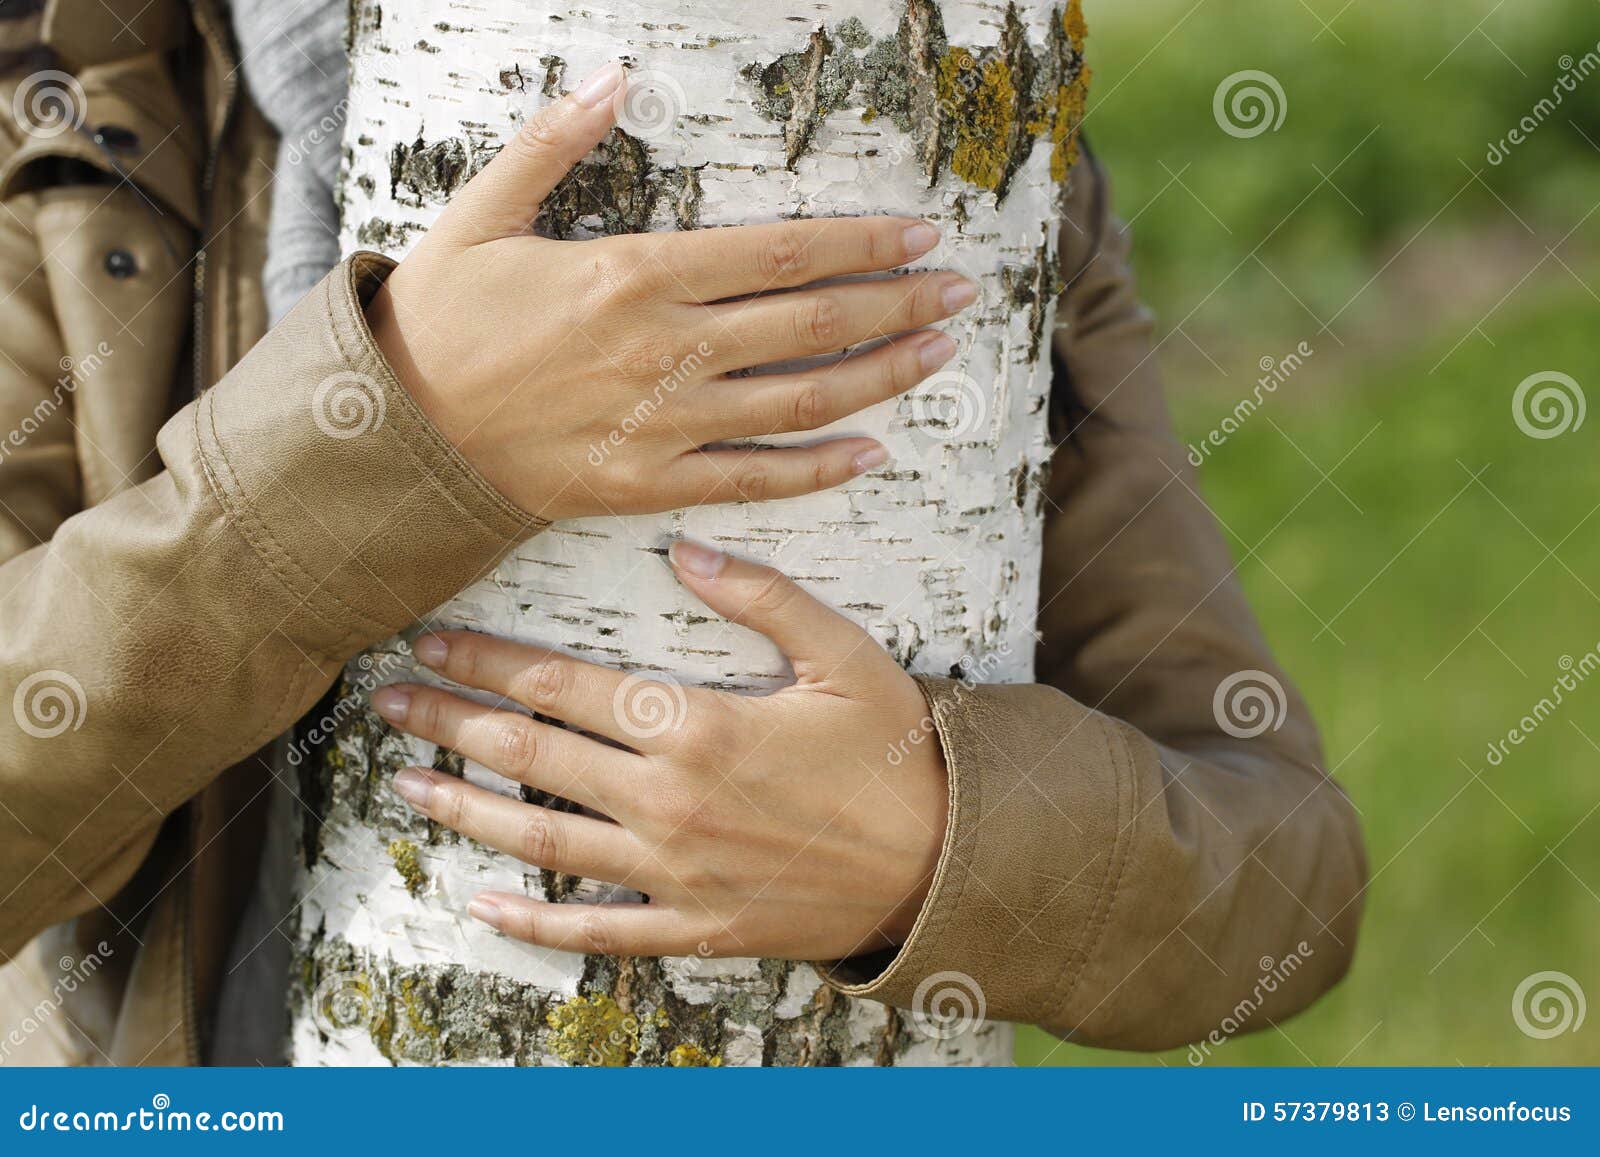 Обними березку. Человек обнимает березу. Девушка обнимает березу. Объятие с березой. Обнимает березку.